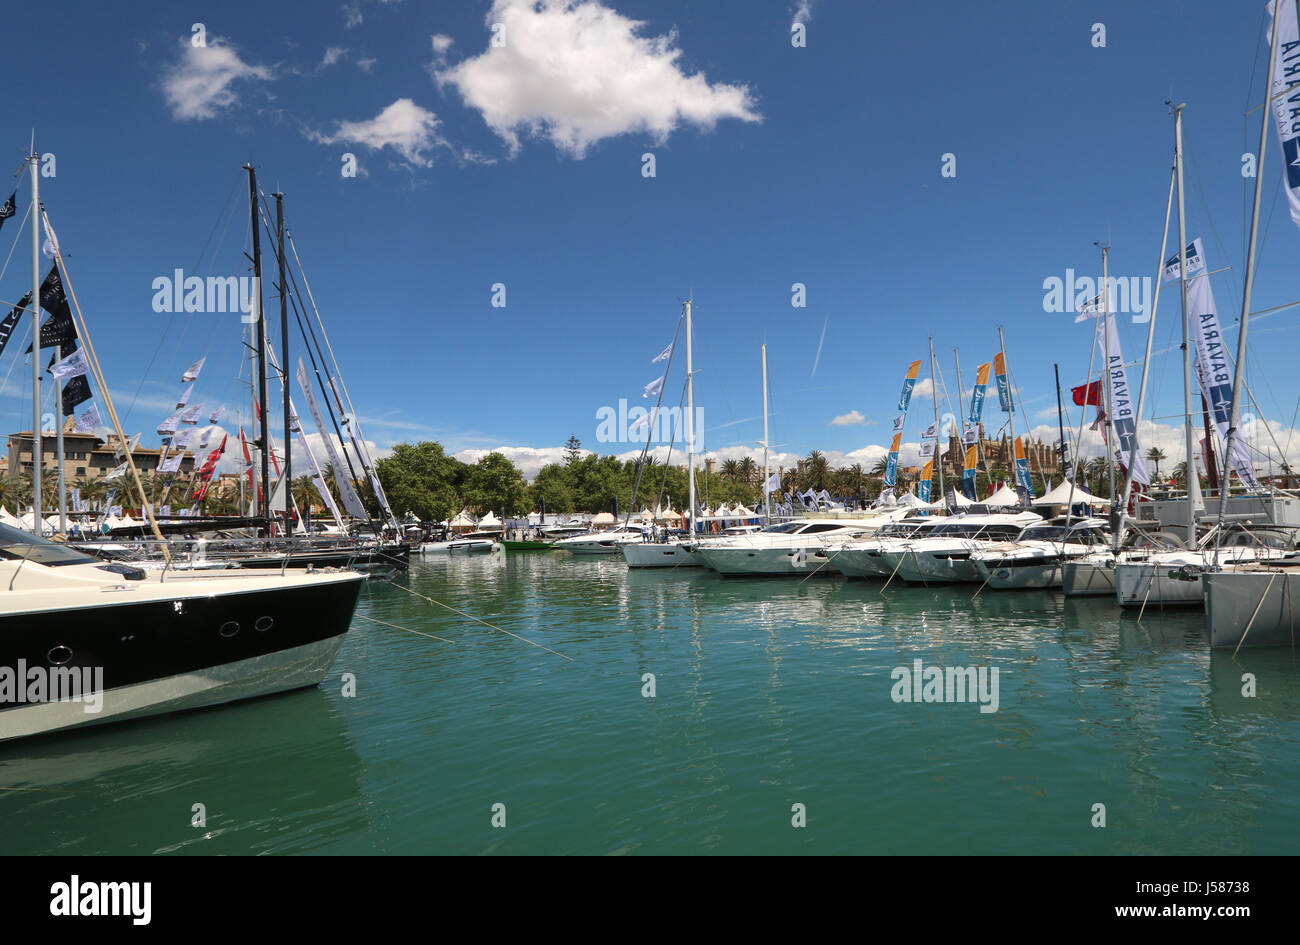 Images of combined Palma International Boat Show 2017 and Palma Superyacht Show 2017 - Palma Old Port ( Moll Vell ), Palma de Mallorca, Baleares Stock Photo